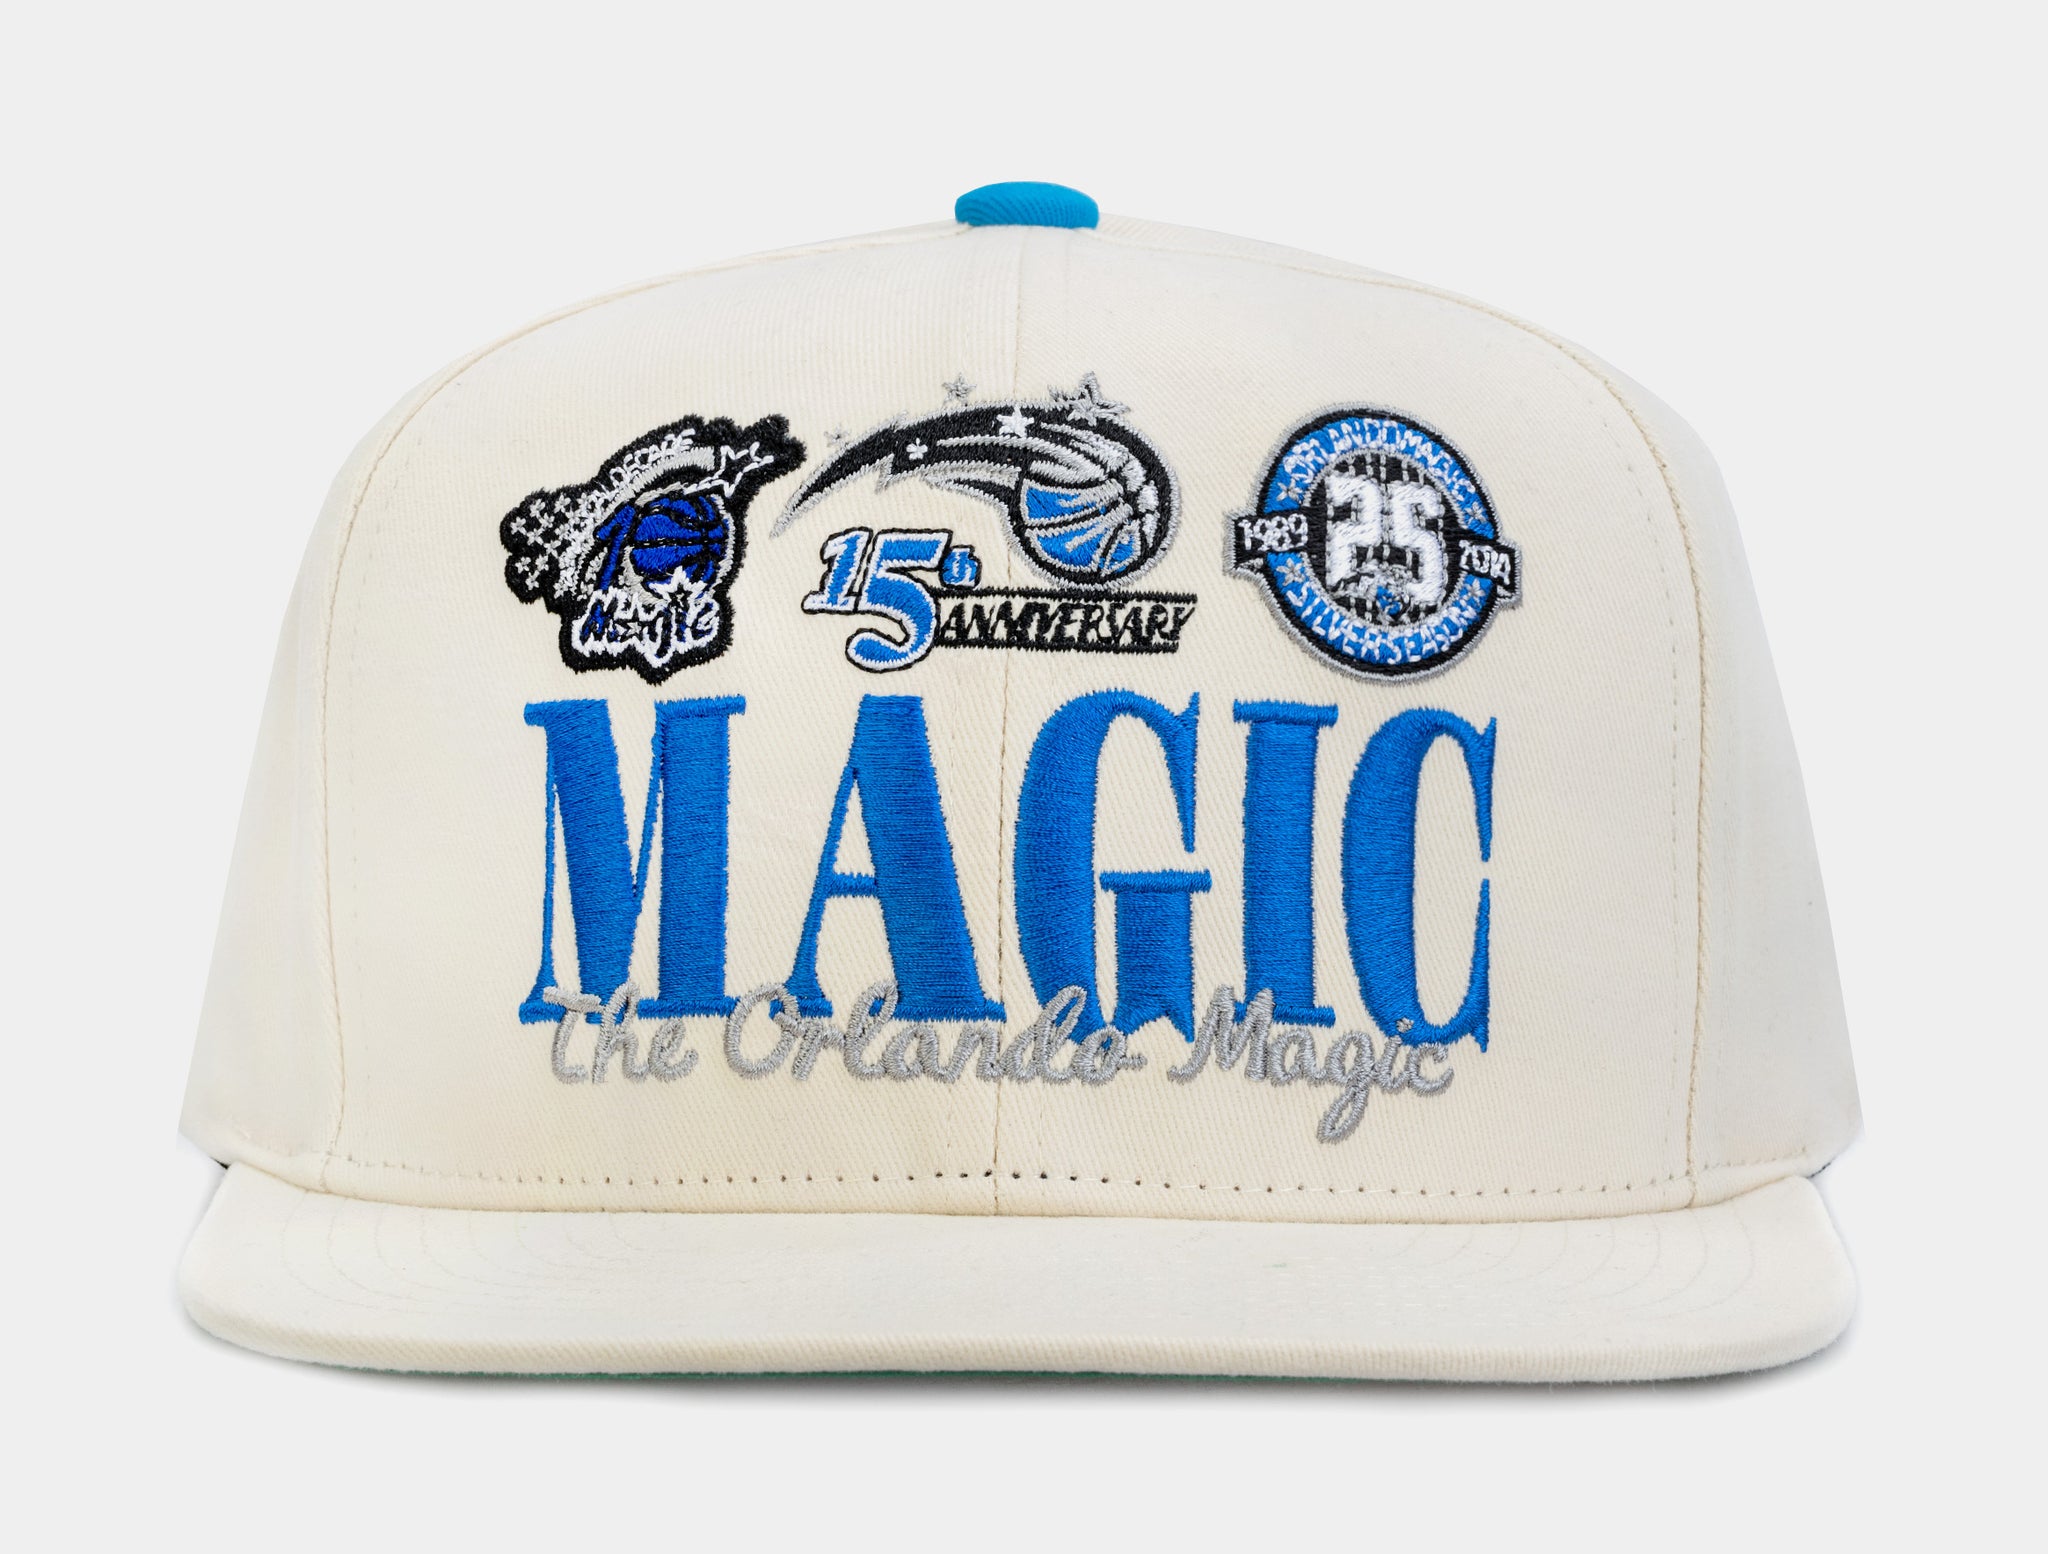 Vintage Orlando Magic Hat Cap NBA Mitchell Ness Snapback